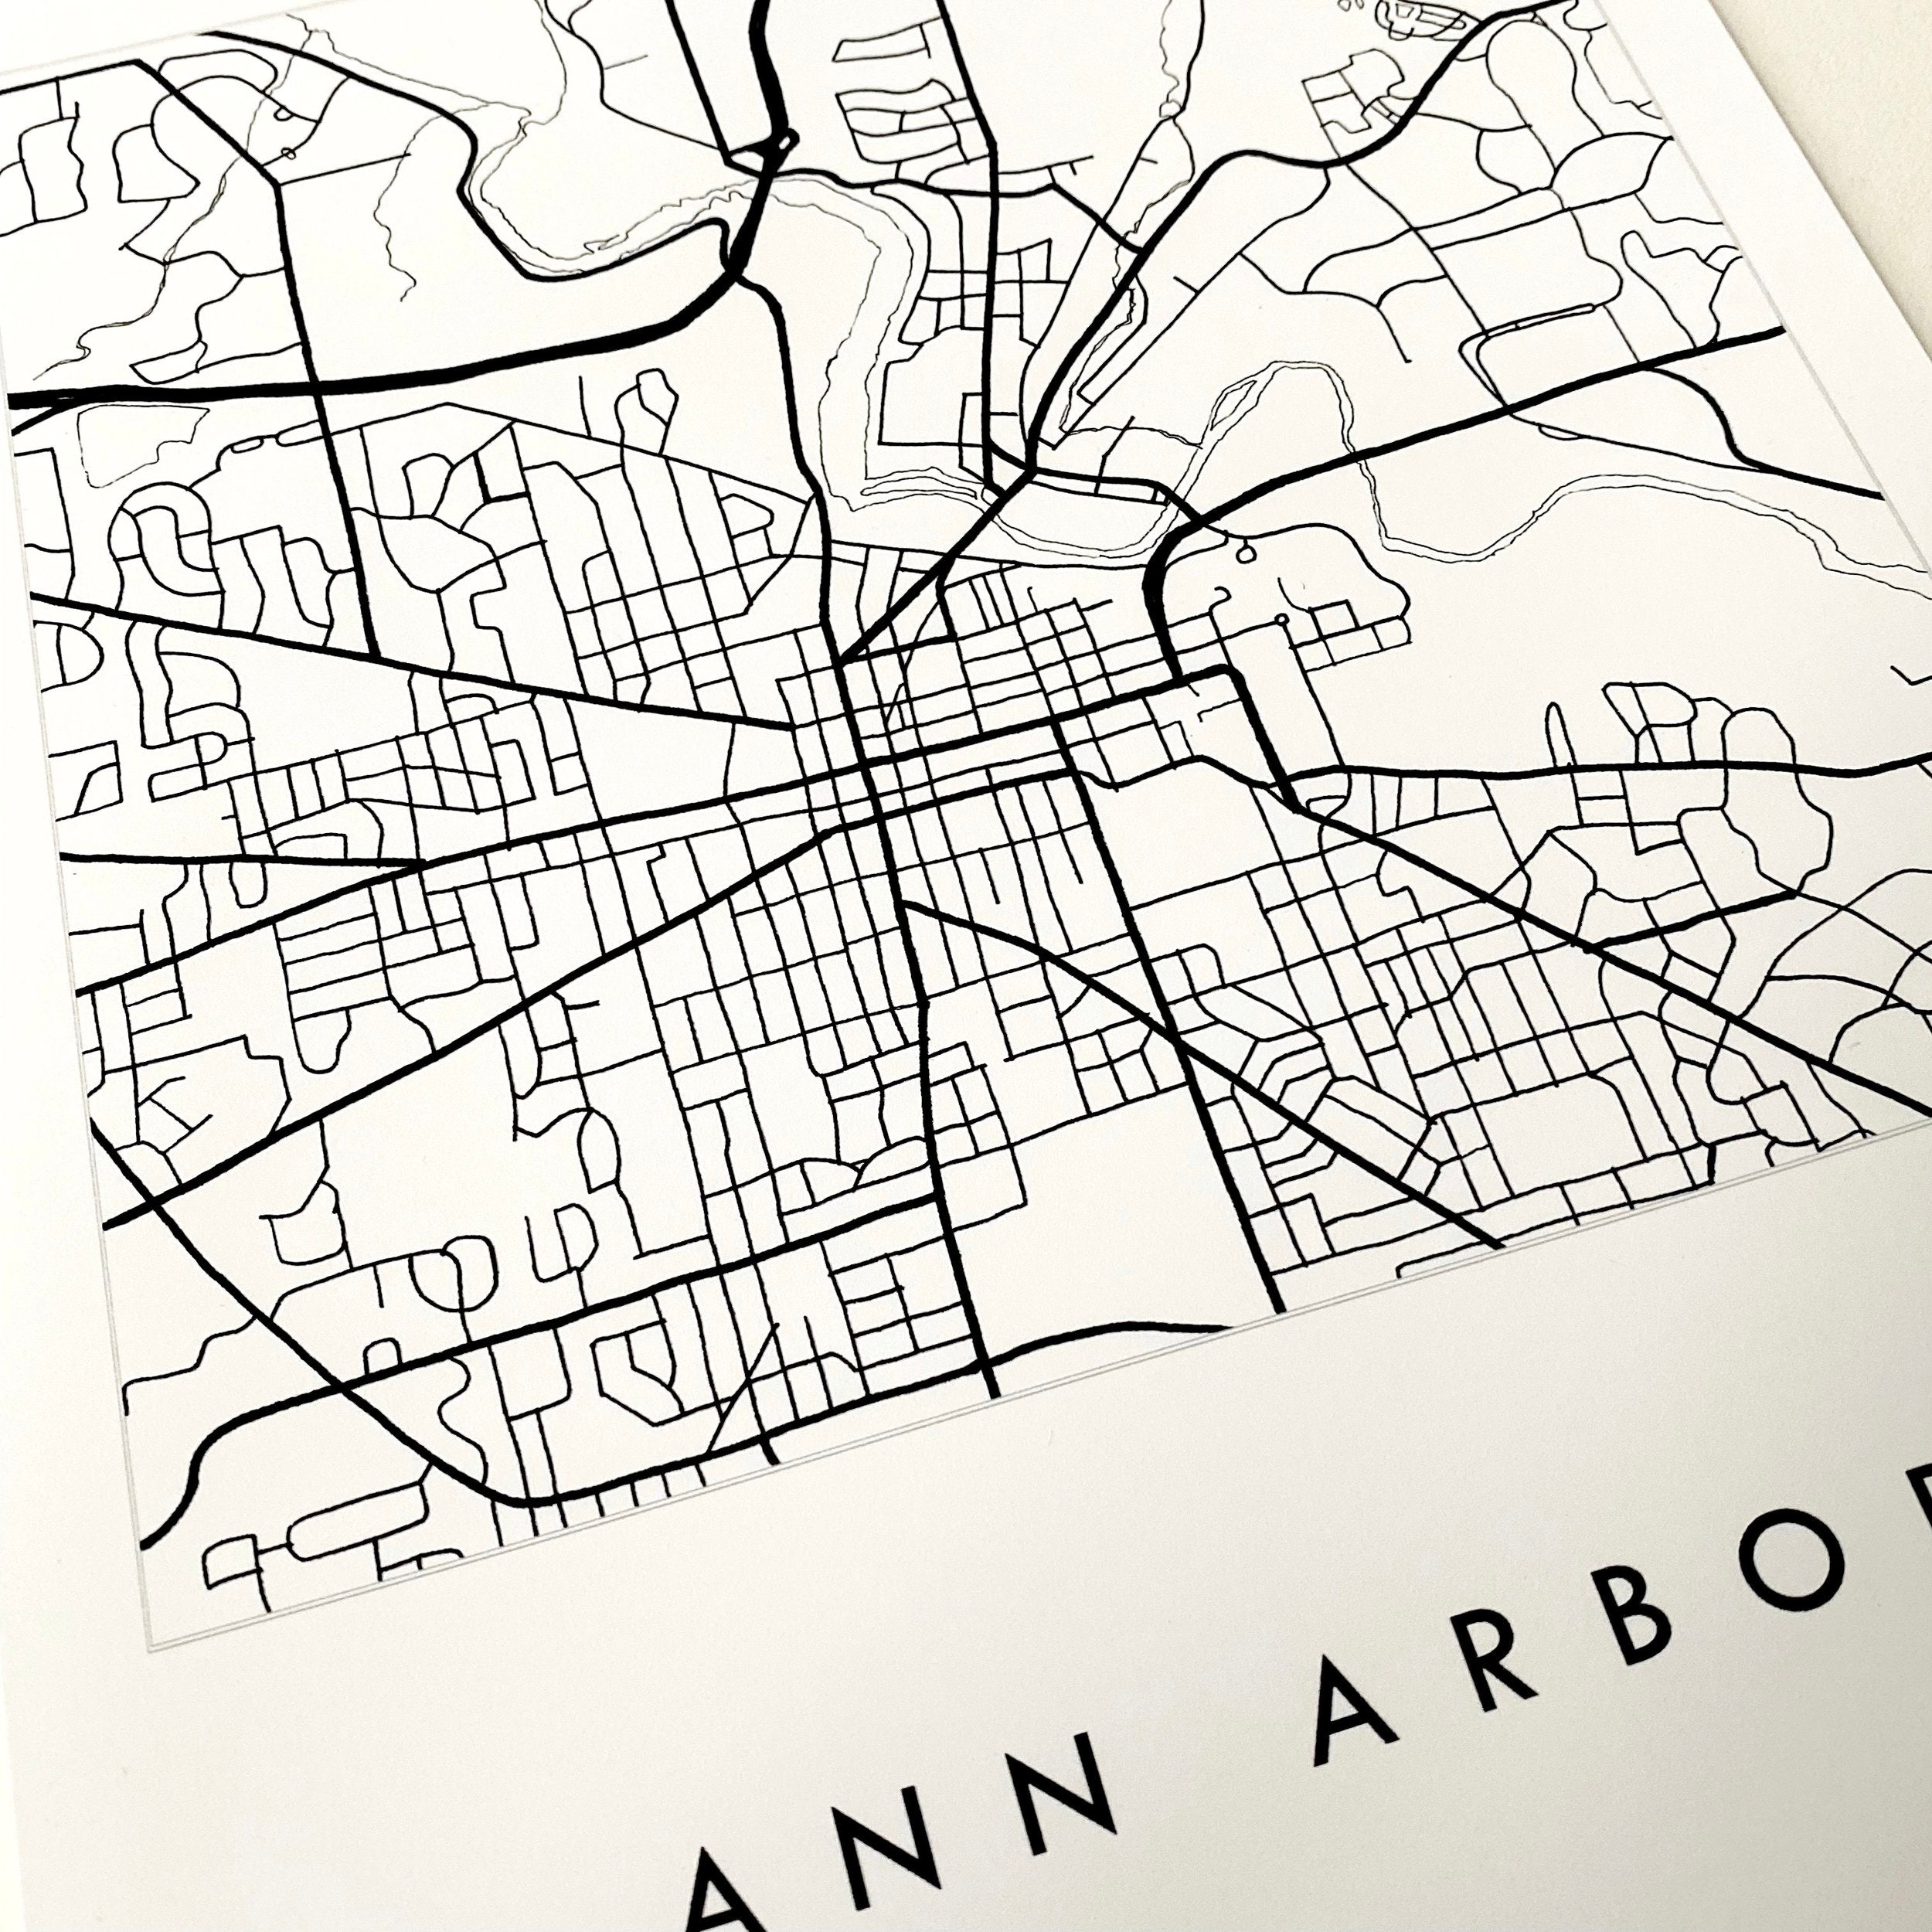 ANN ARBOR Michigan City Lines Map: PRINT